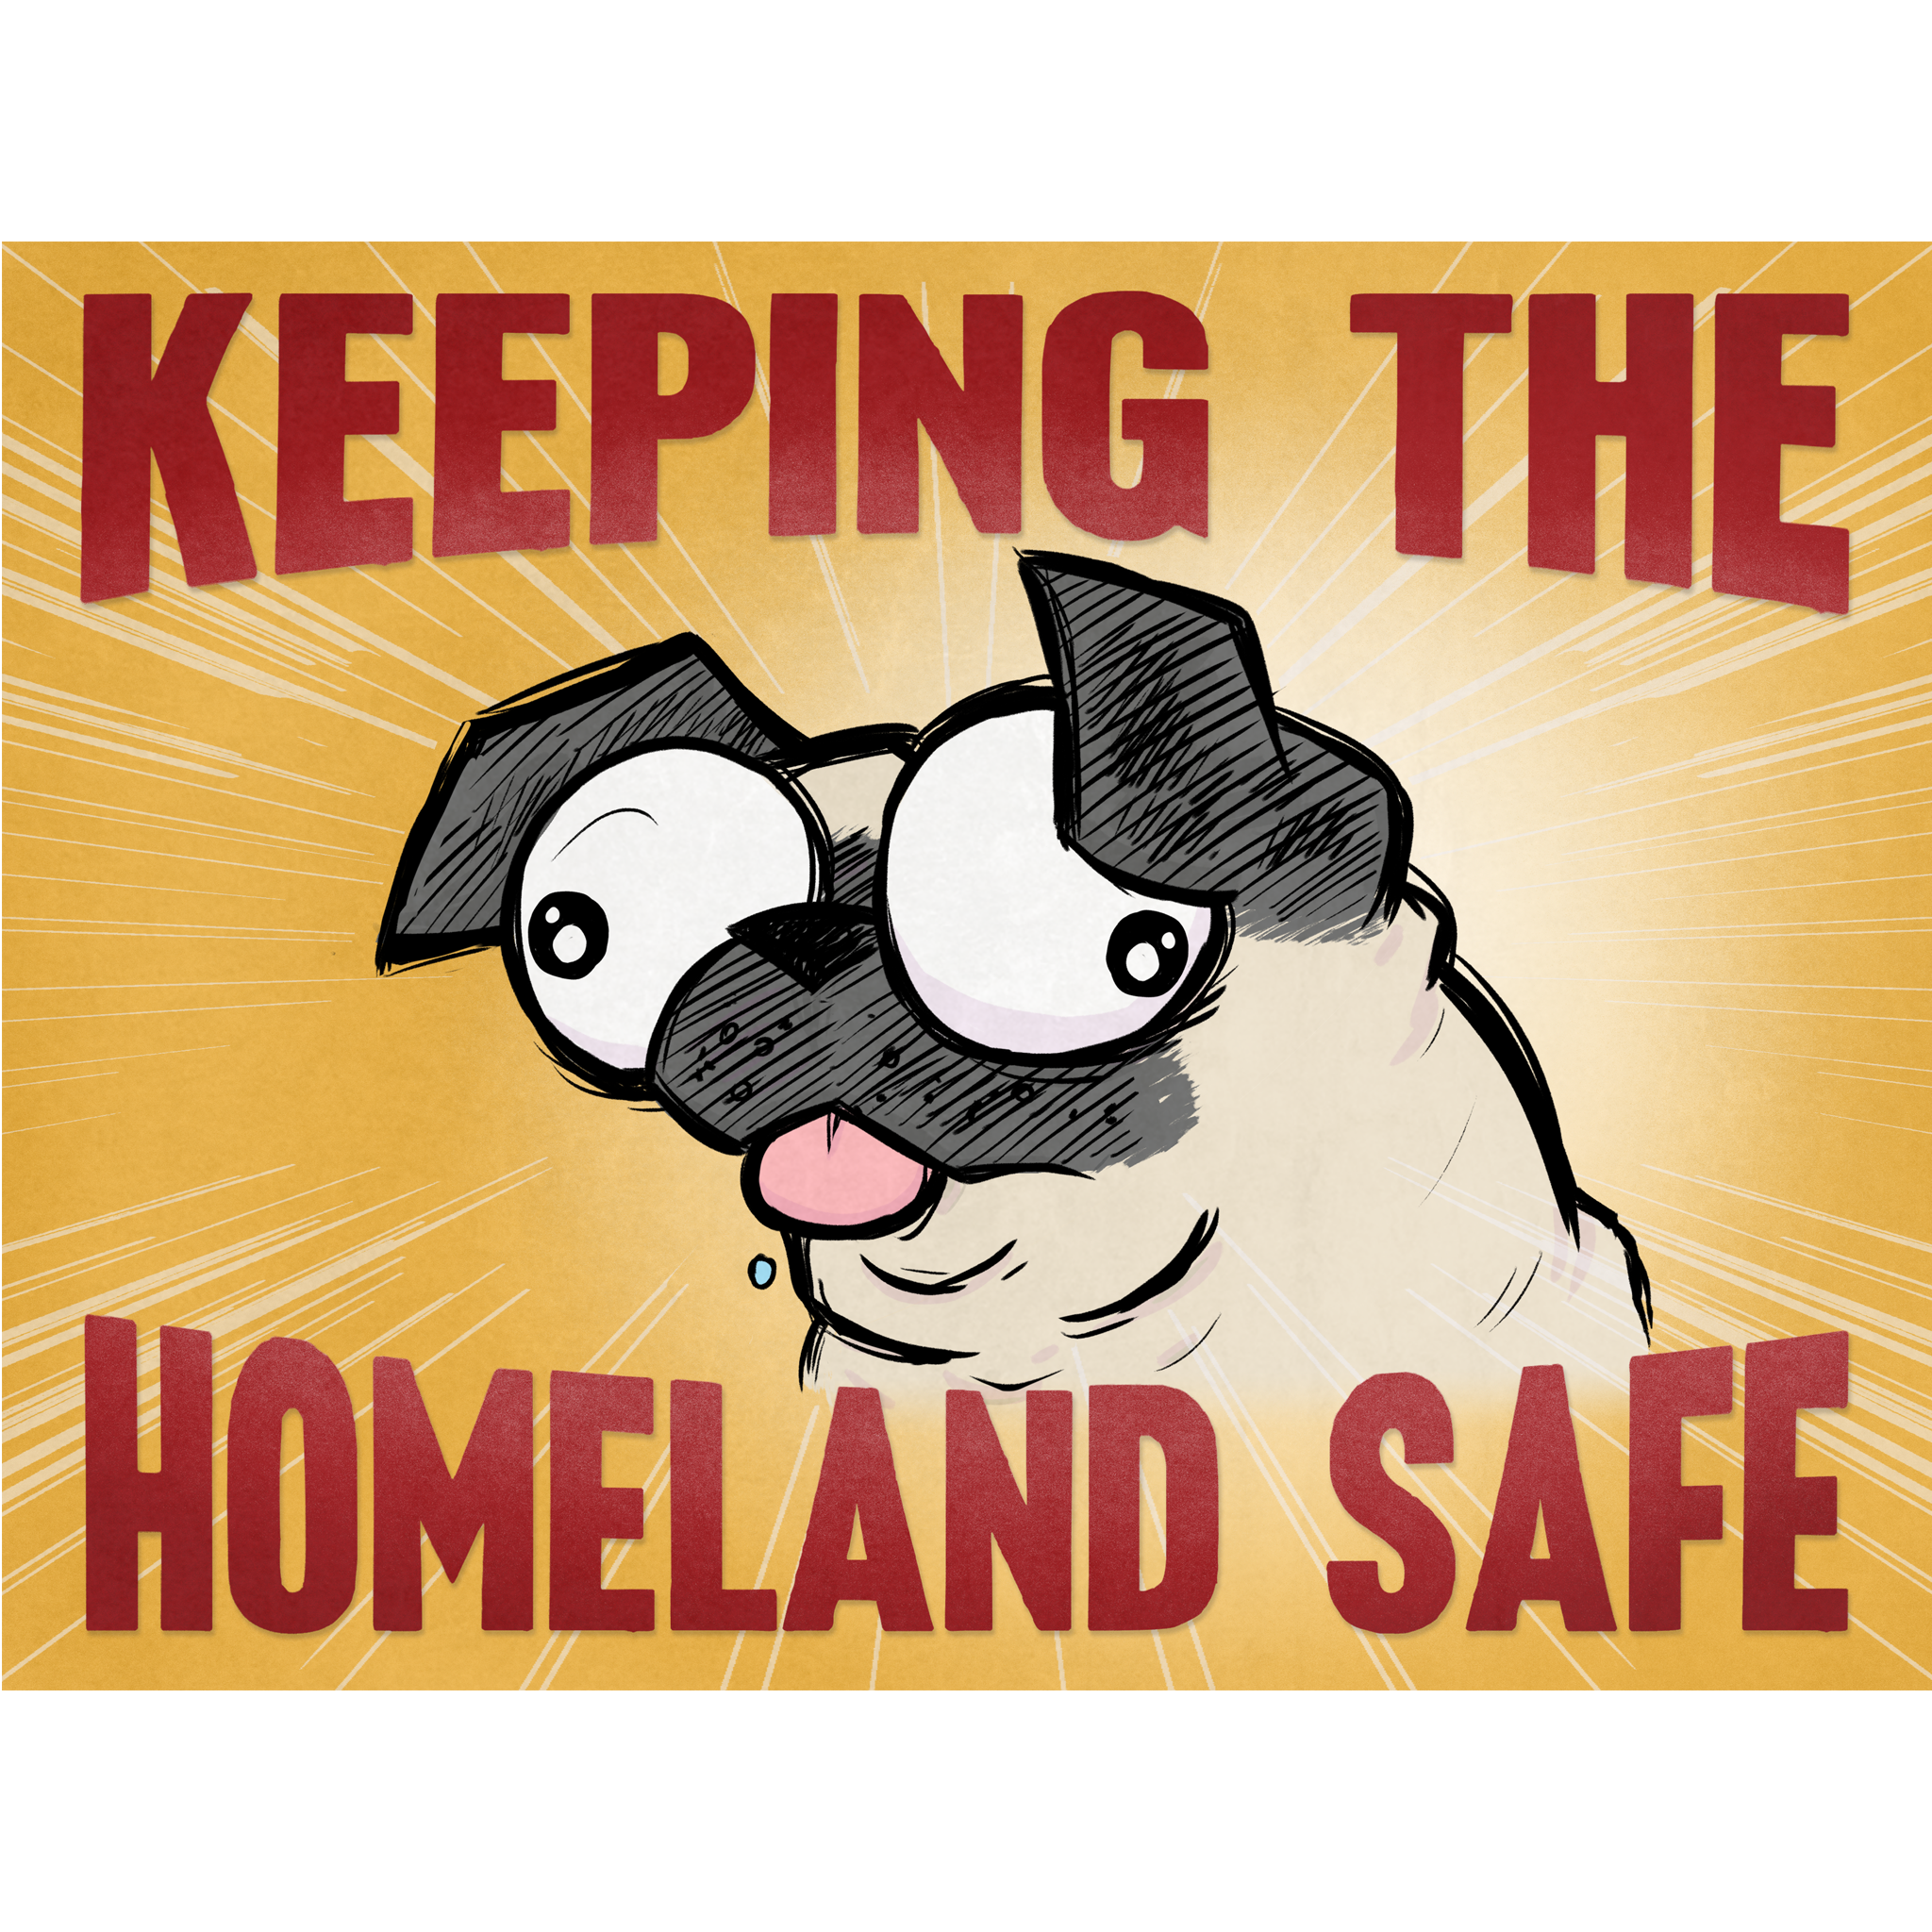 Print: Keeping the Homeland Safe!